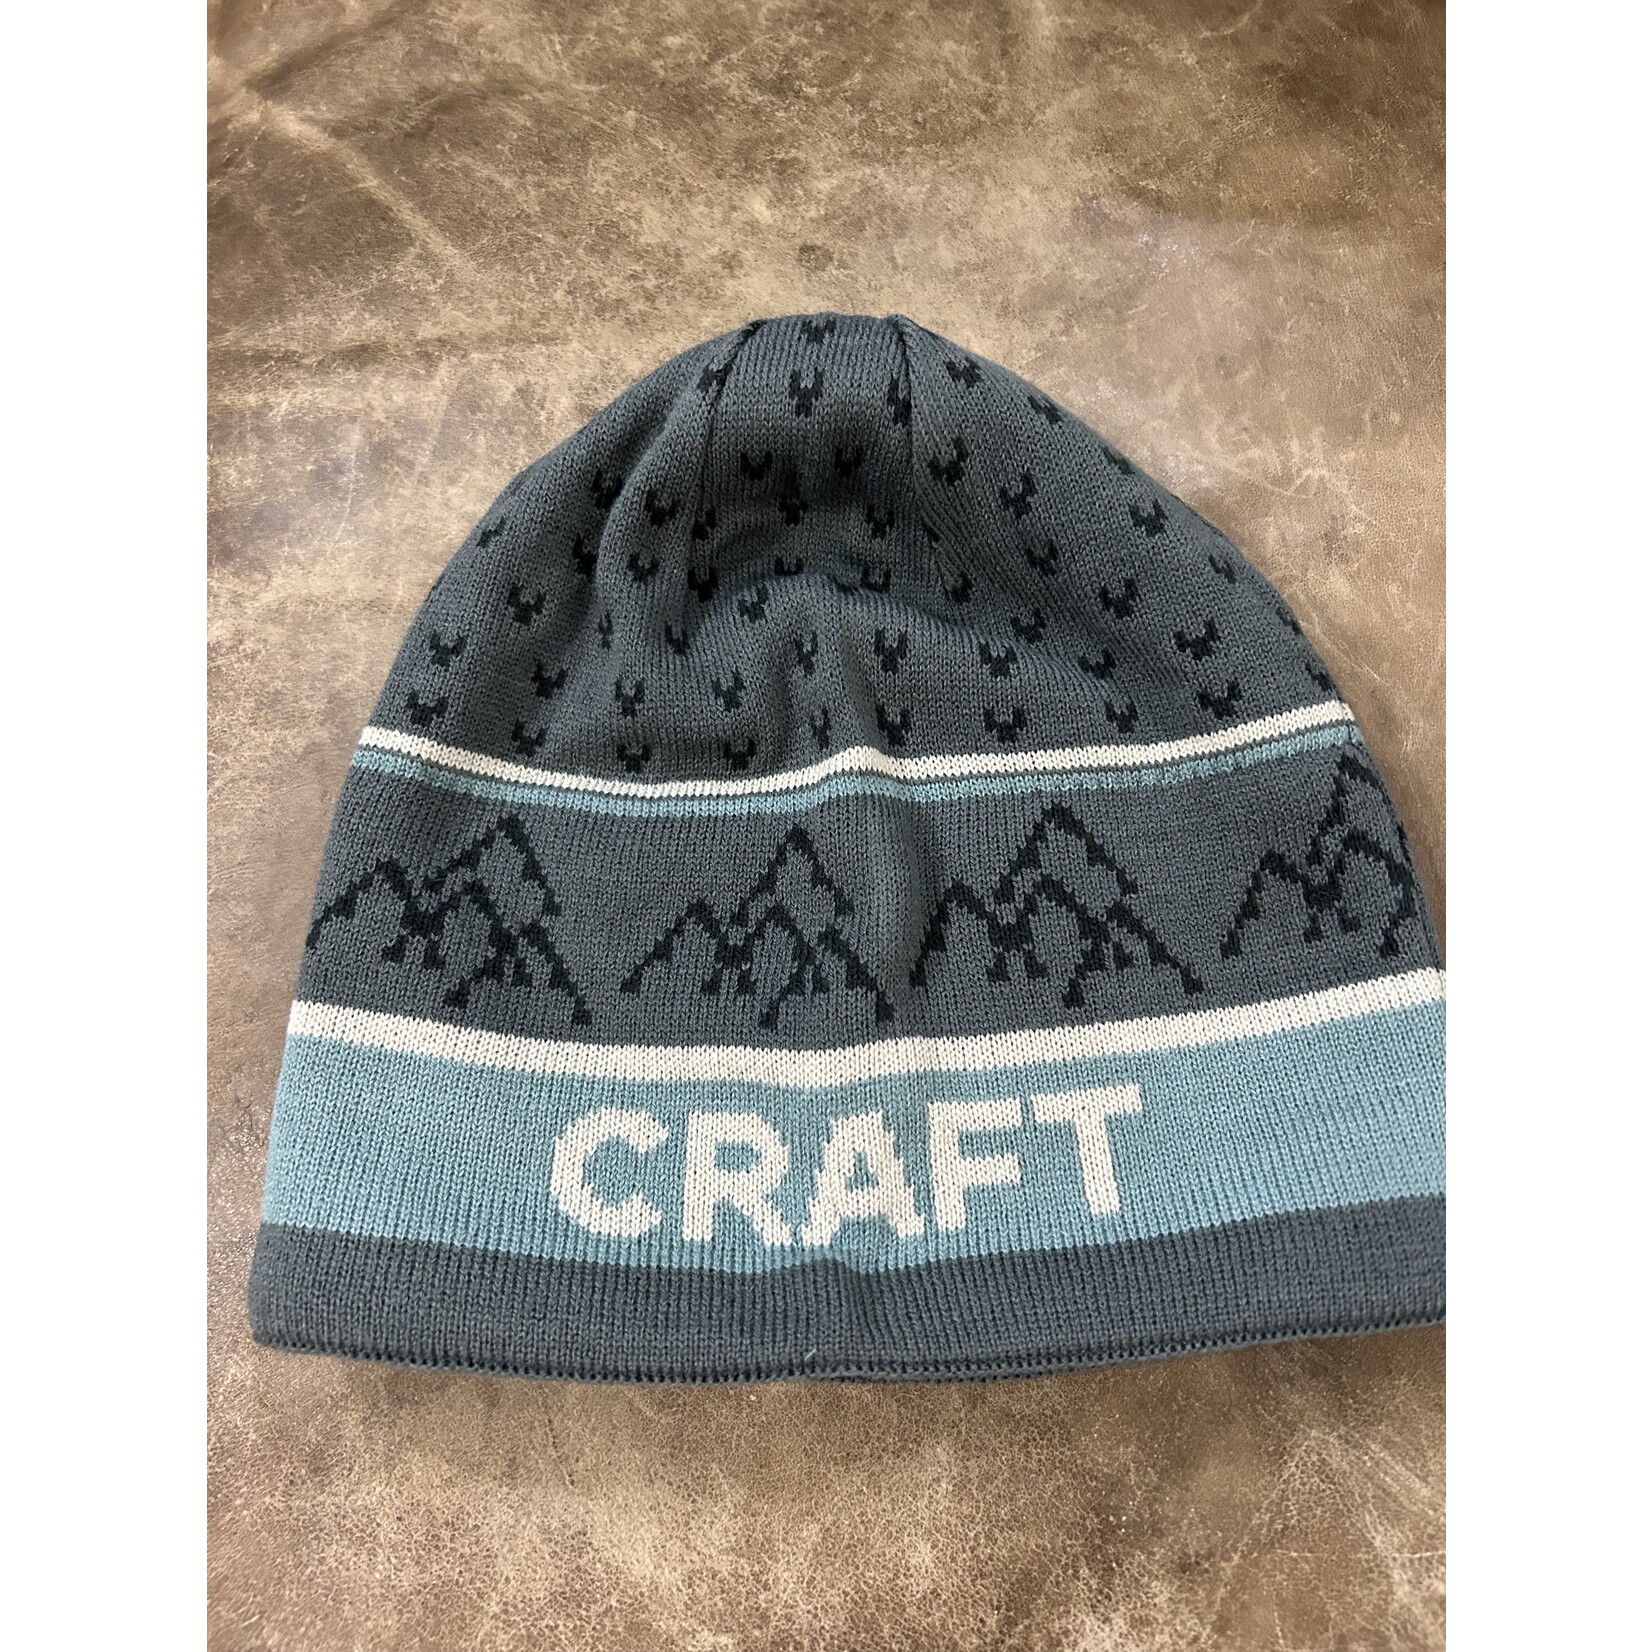 Craft Craft Nordic Ski Core BC knit hat